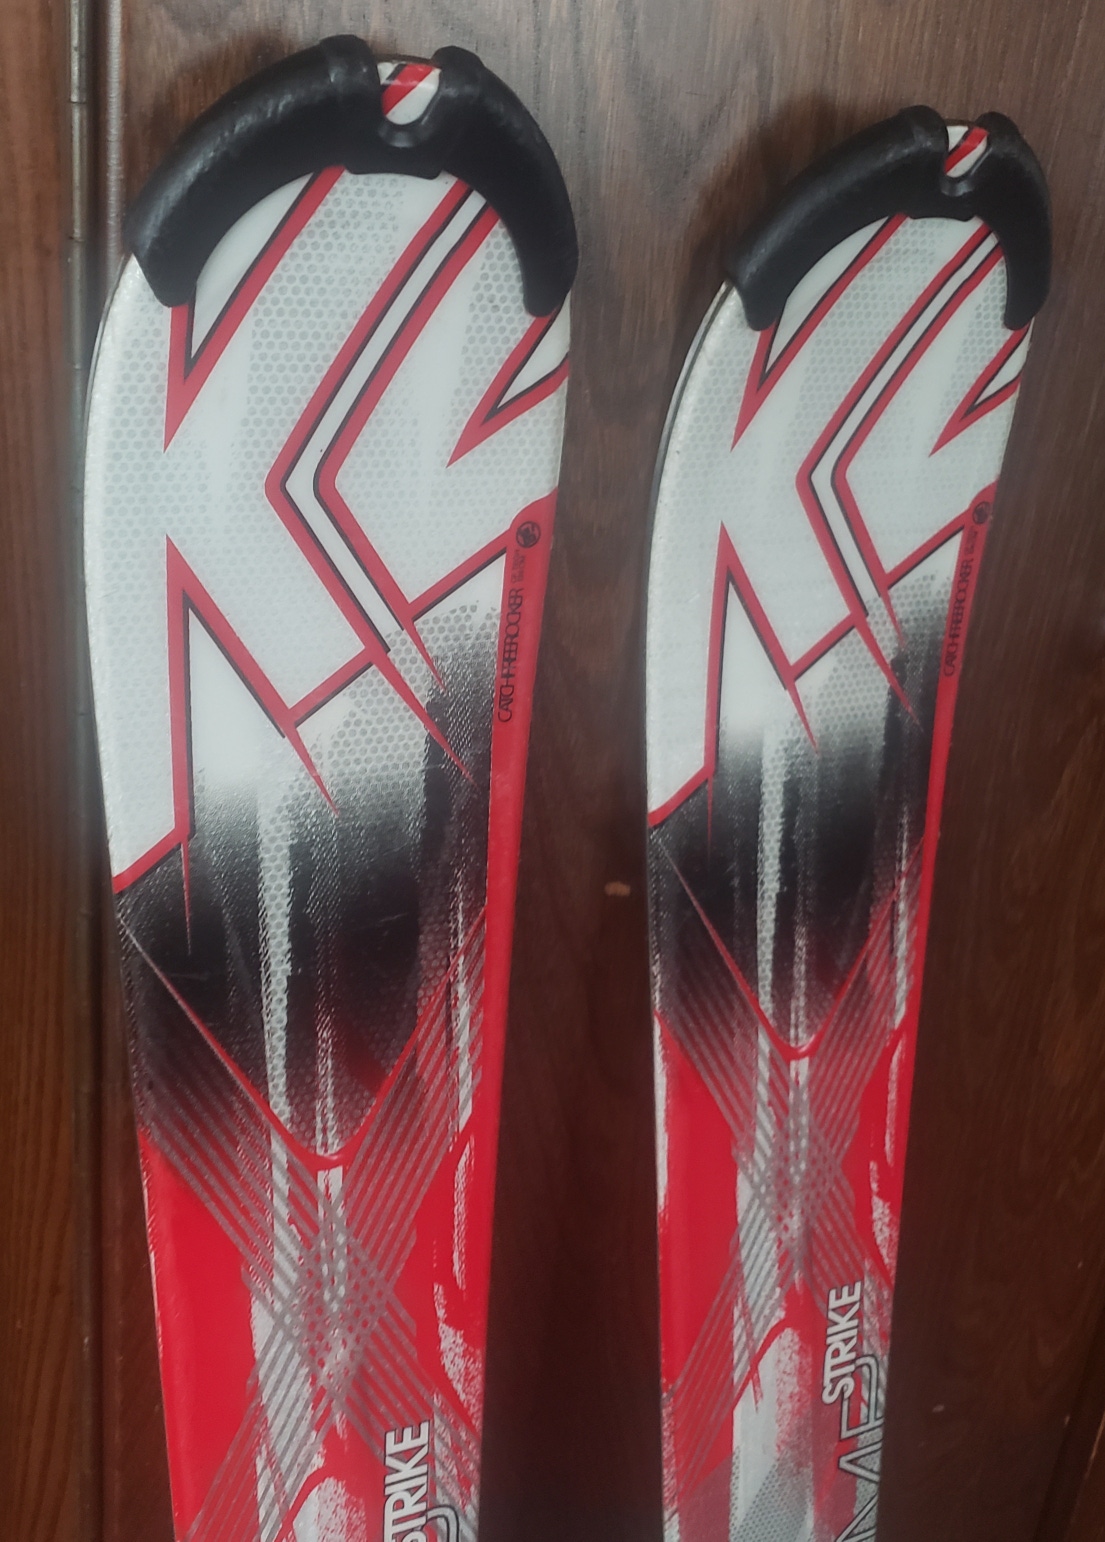 136cm JUNIOR Skis K2 AMP STRIKE w/MARKER MOD 7 BINDINGS *USED* CLEANED*READY TO USE